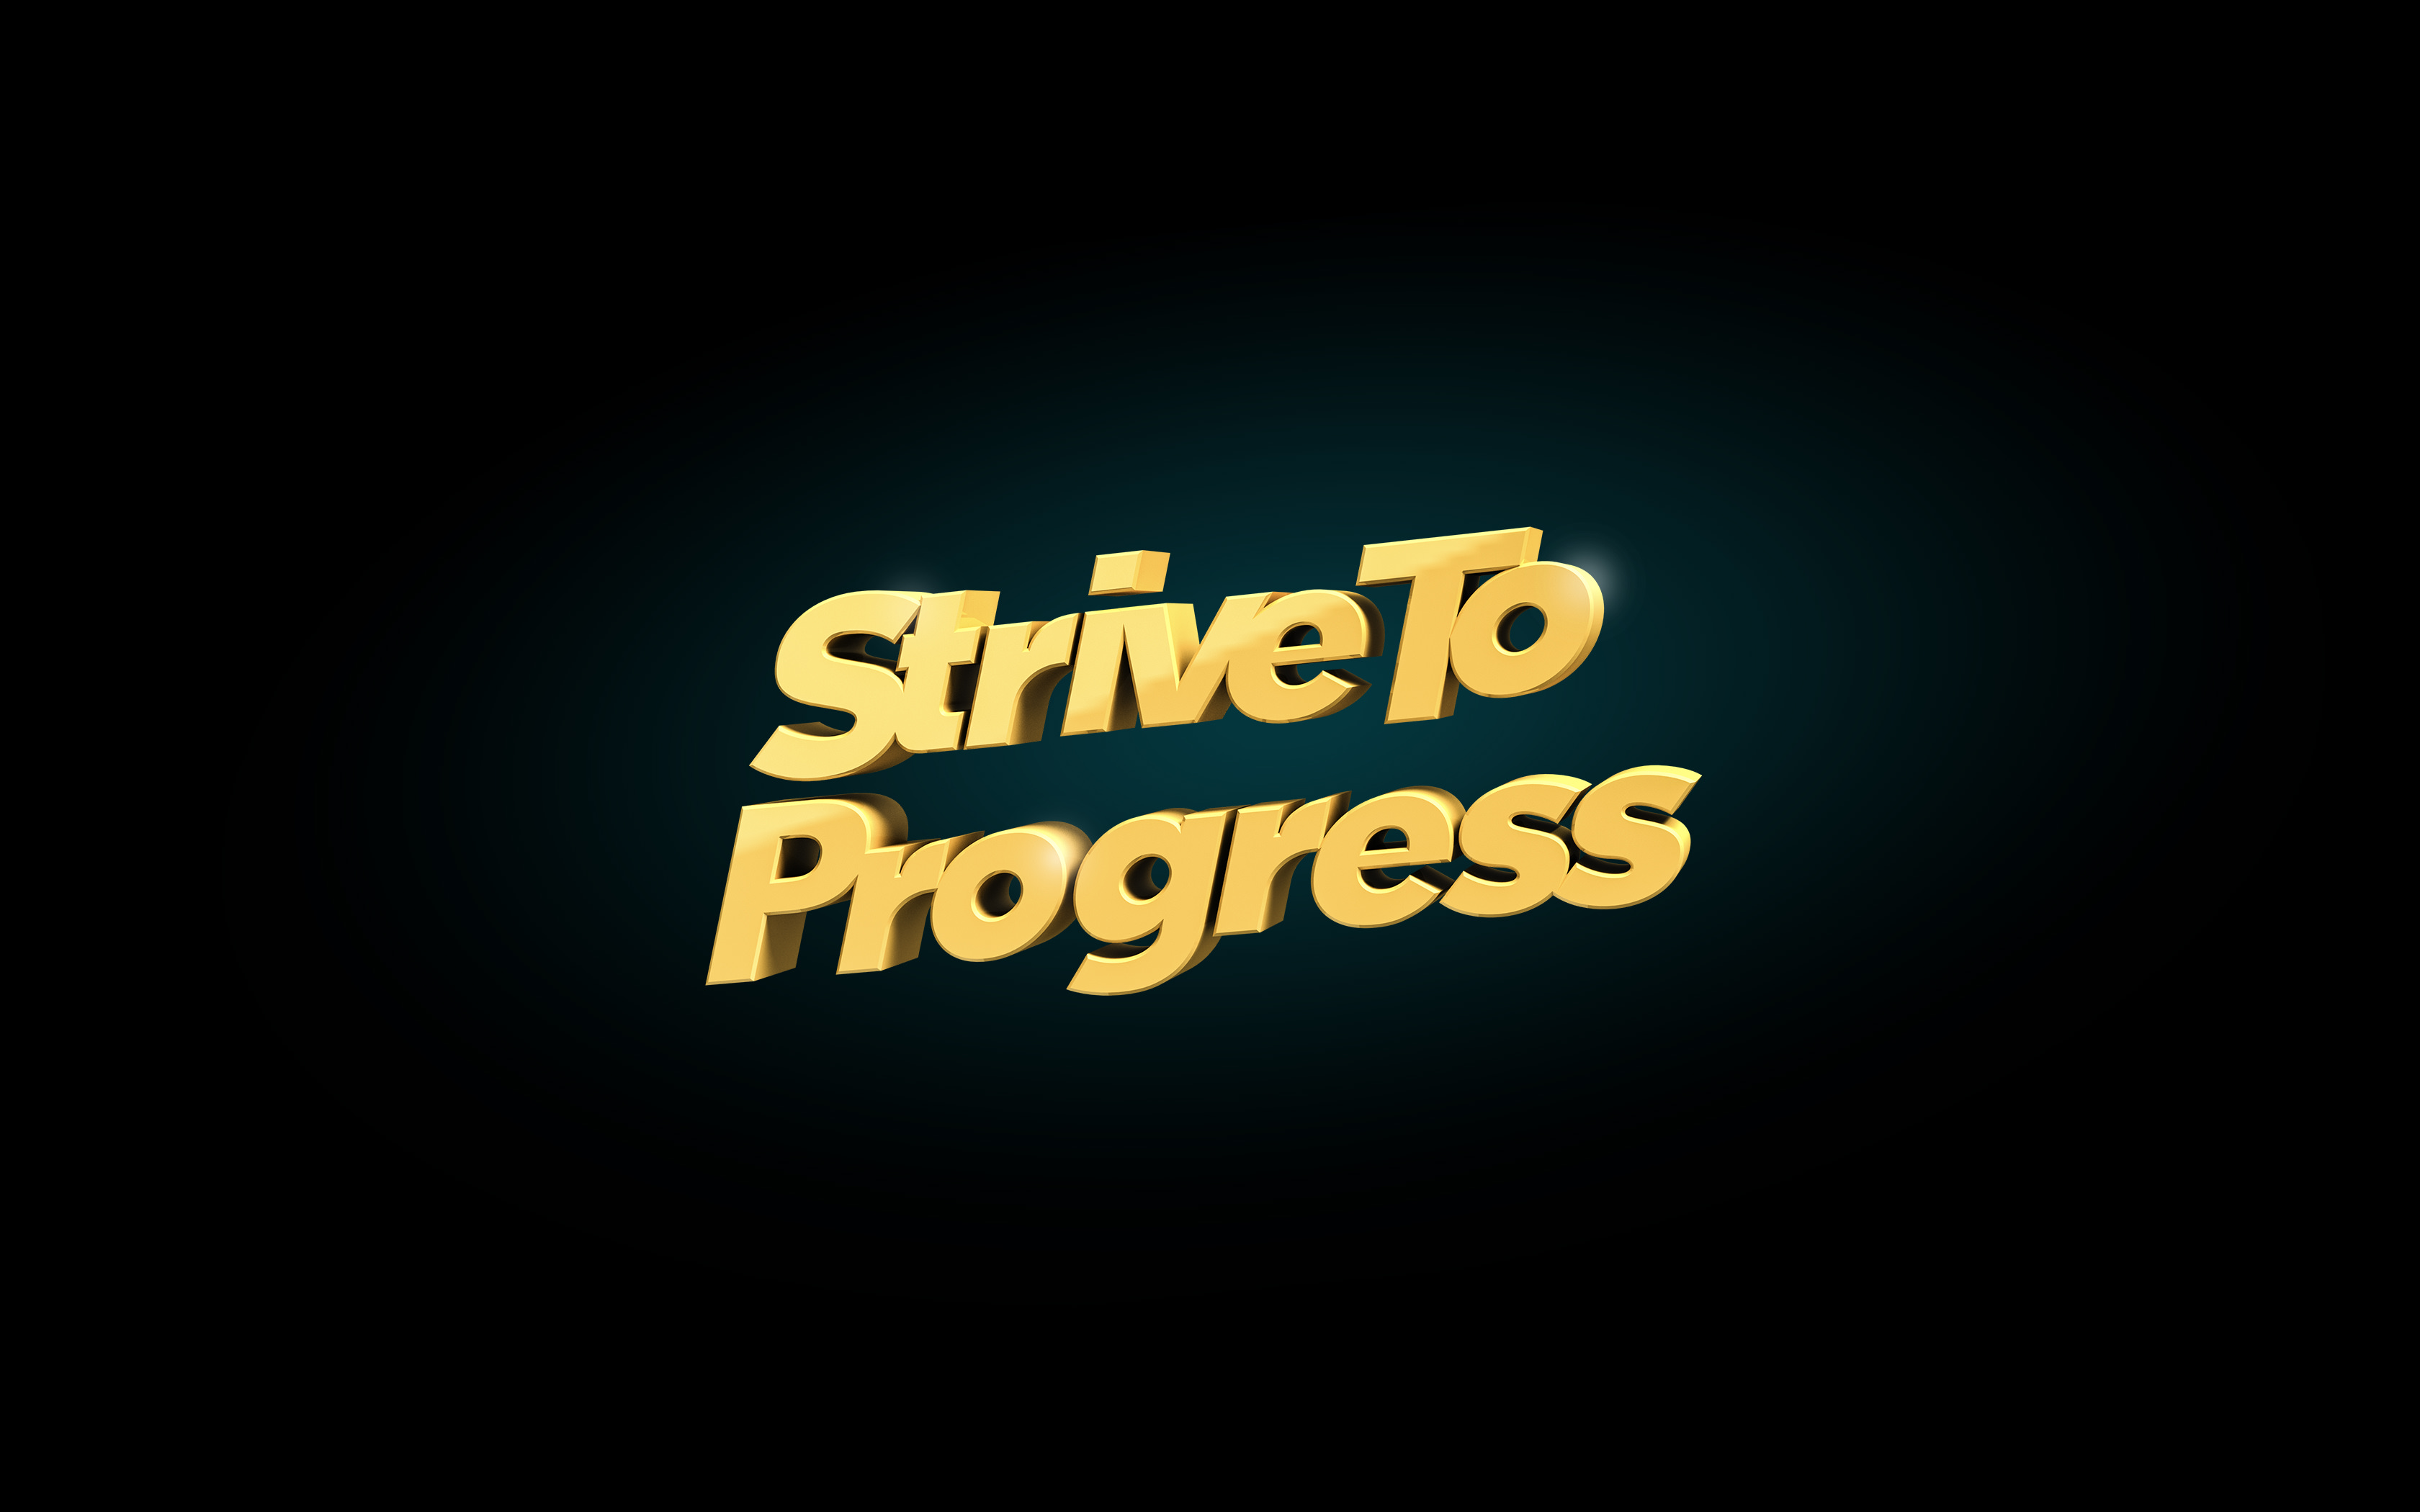 Strive to progress